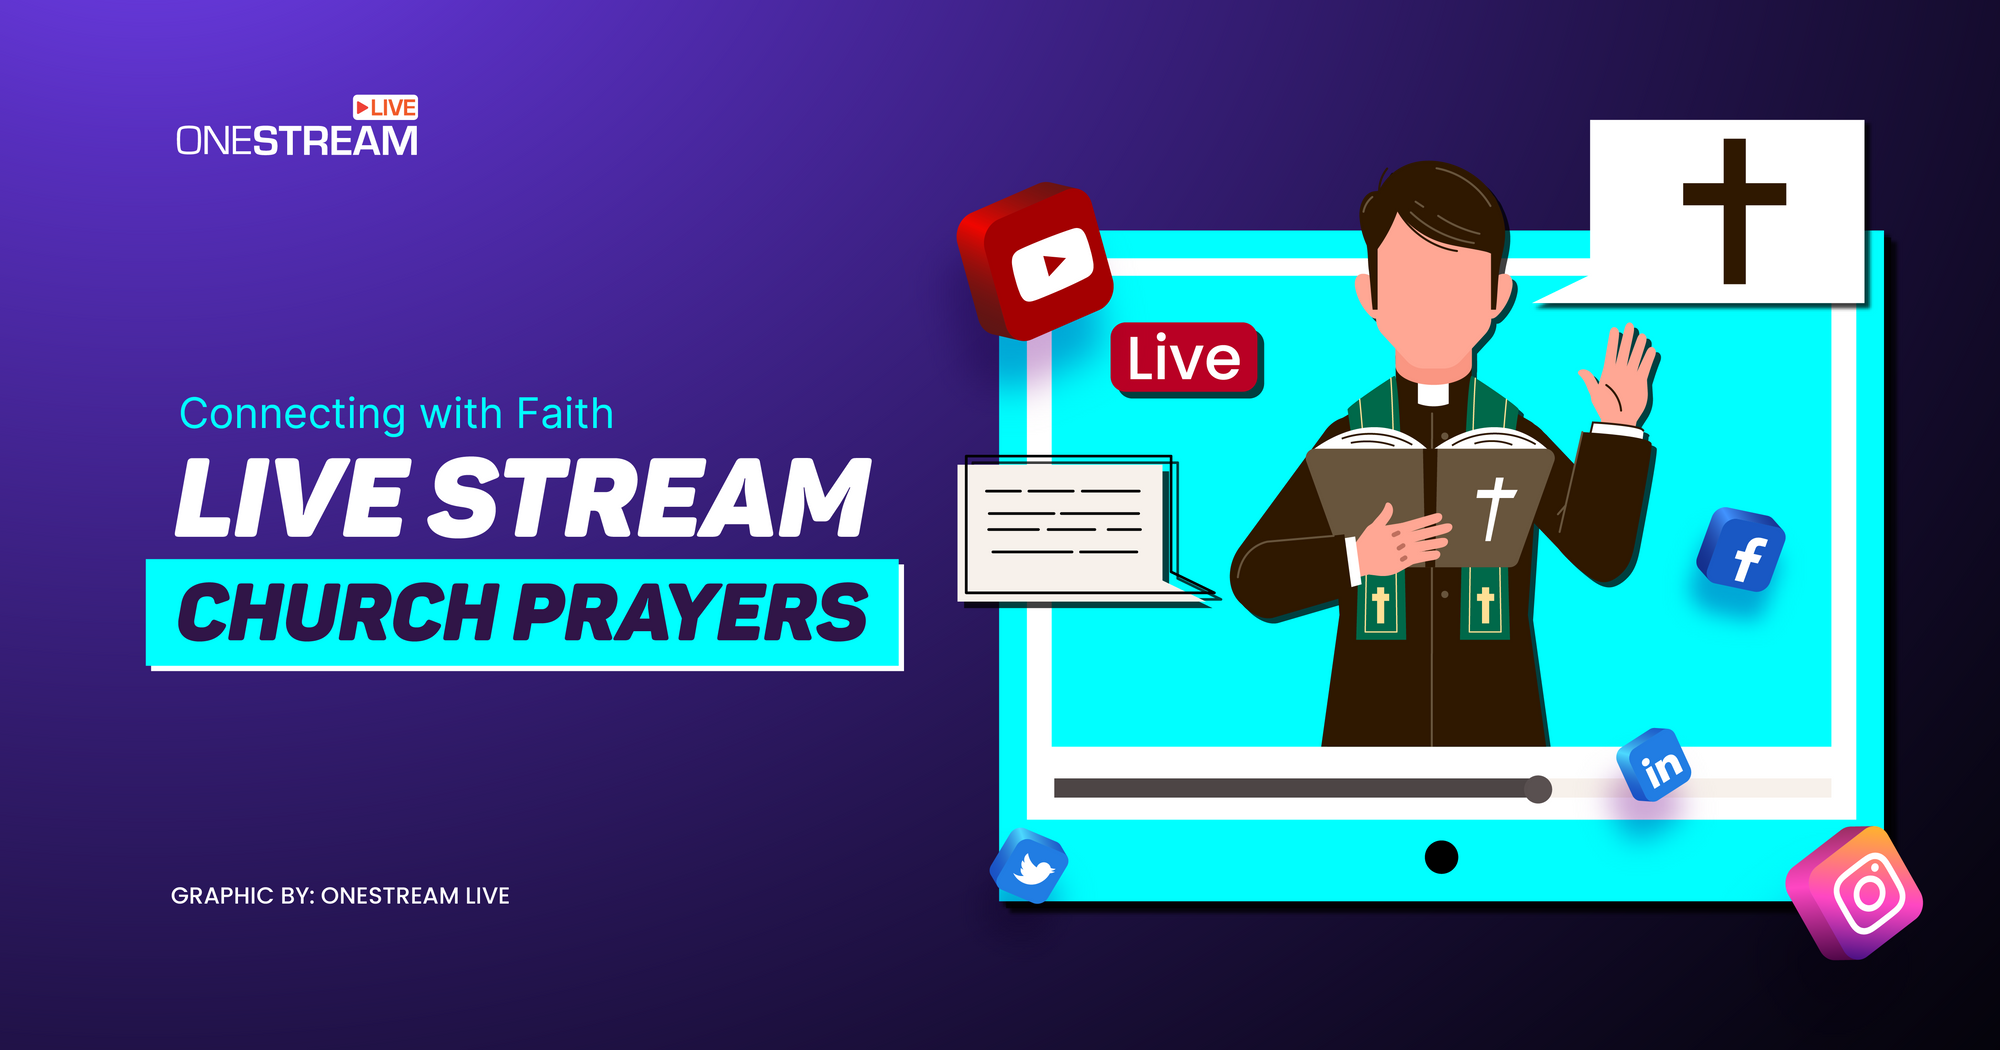 Live stream church prayers with onestream live